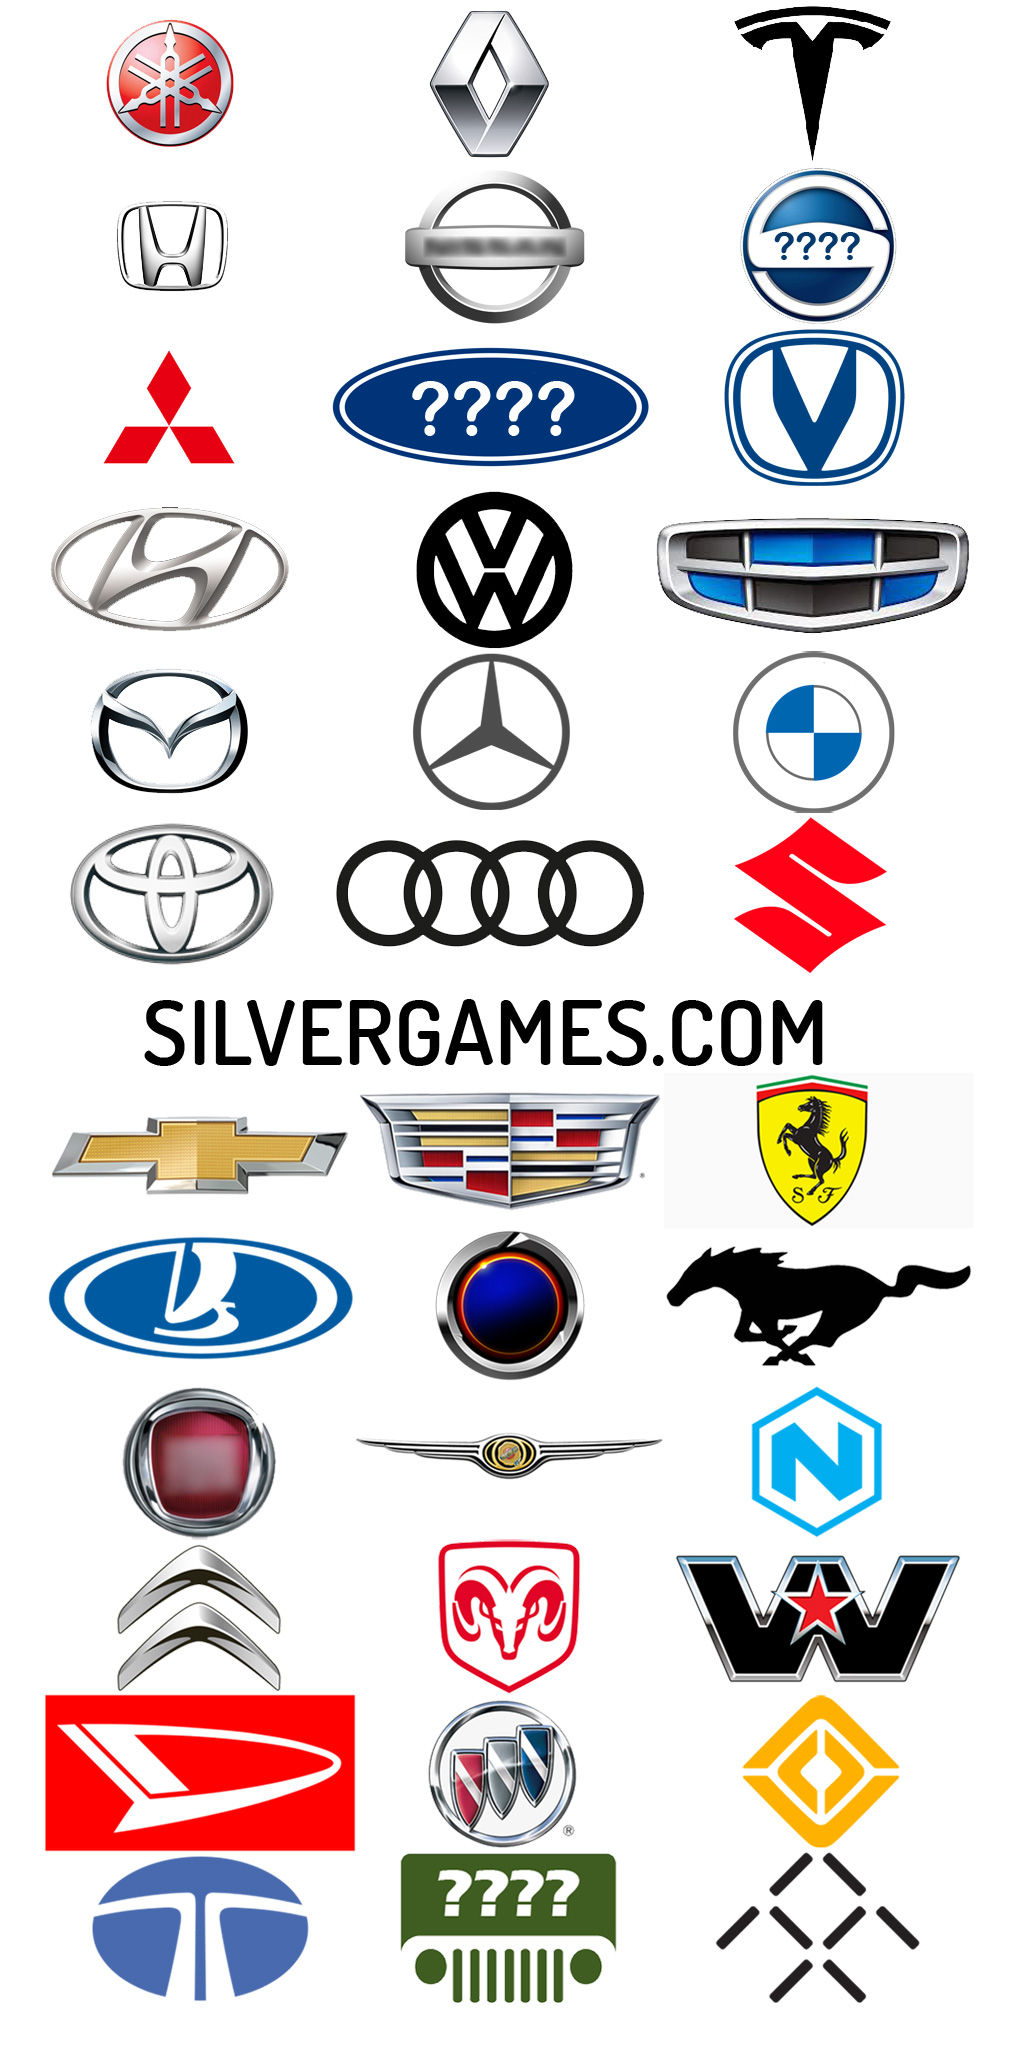 https://a.silvergames.com/screenshots/car-logo-quiz/5_car-logos.jpg